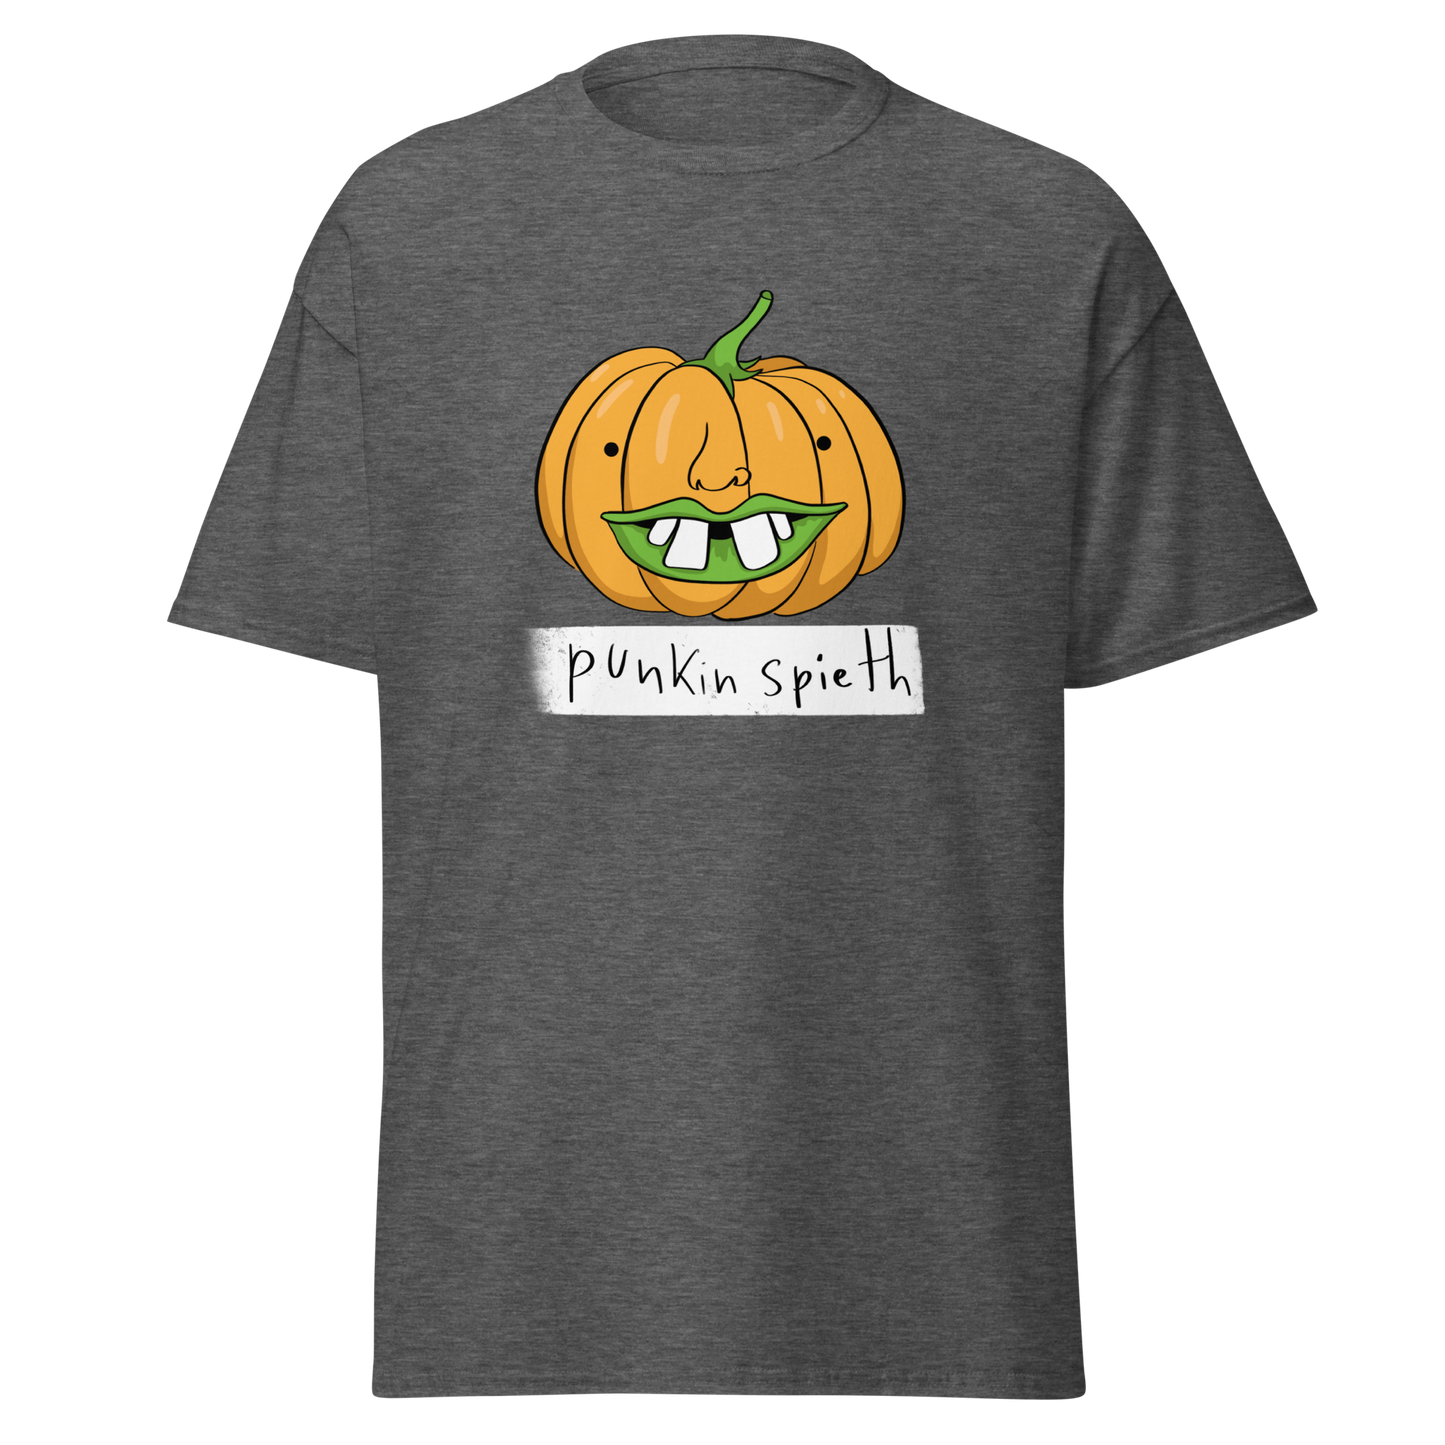 Punkin Spith T-Shirt